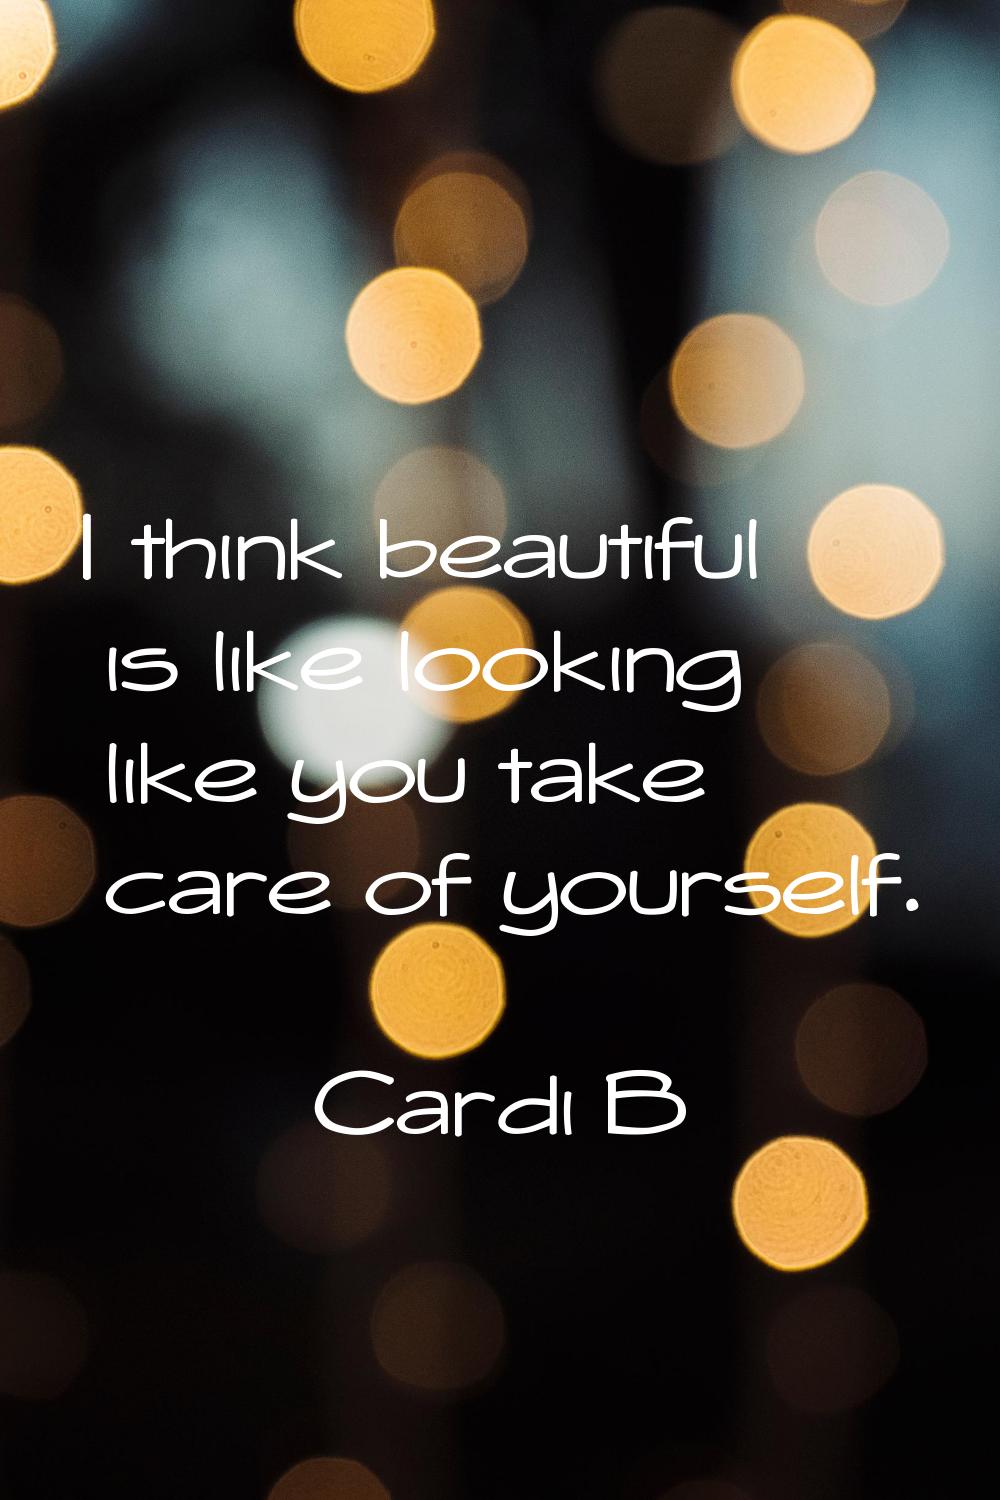 I think beautiful is like looking like you take care of yourself.